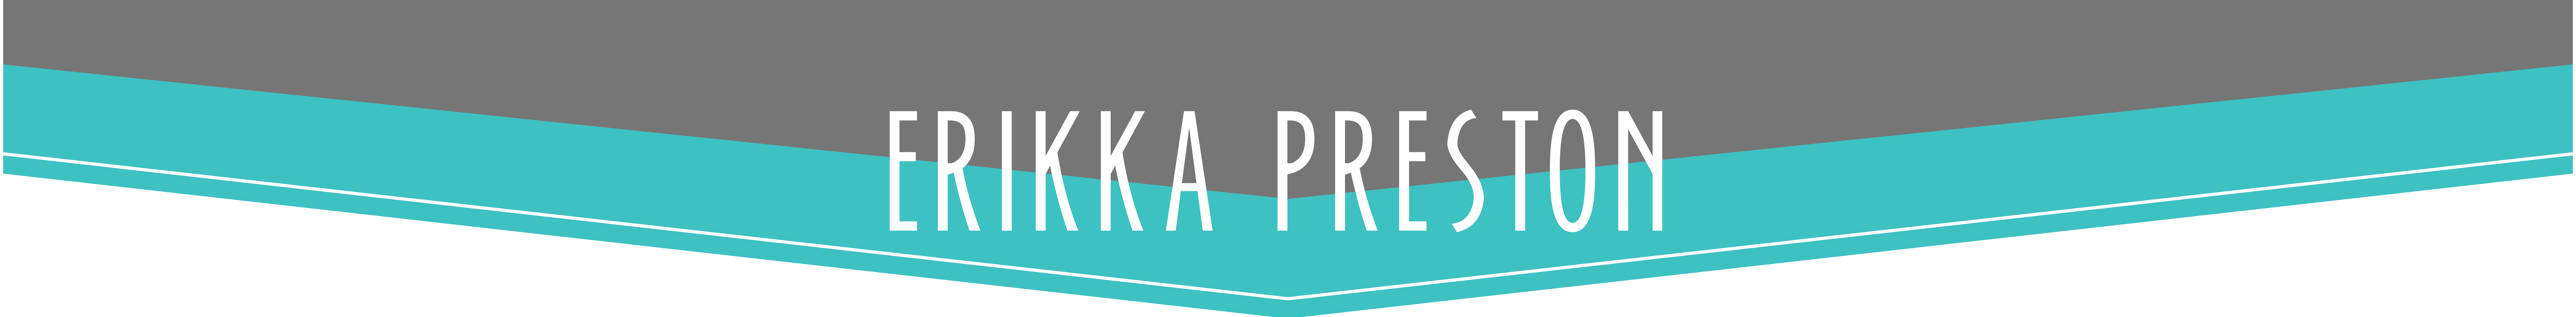 Erikka Preston's profile banner